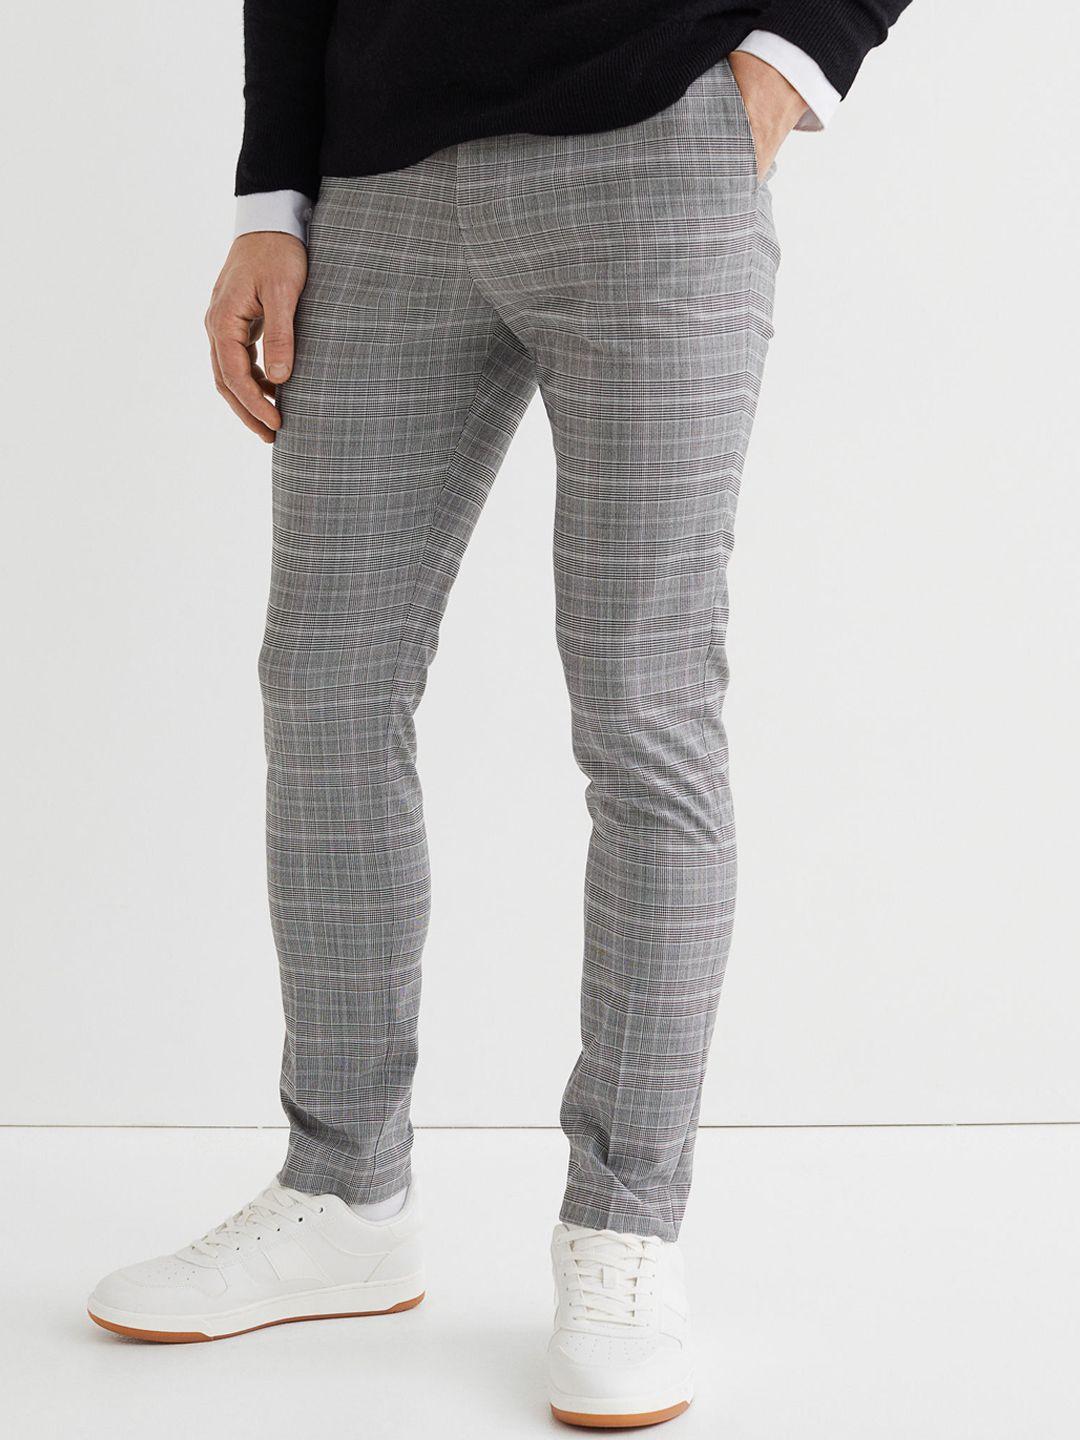 h&m men grey suit trousers skinny fit